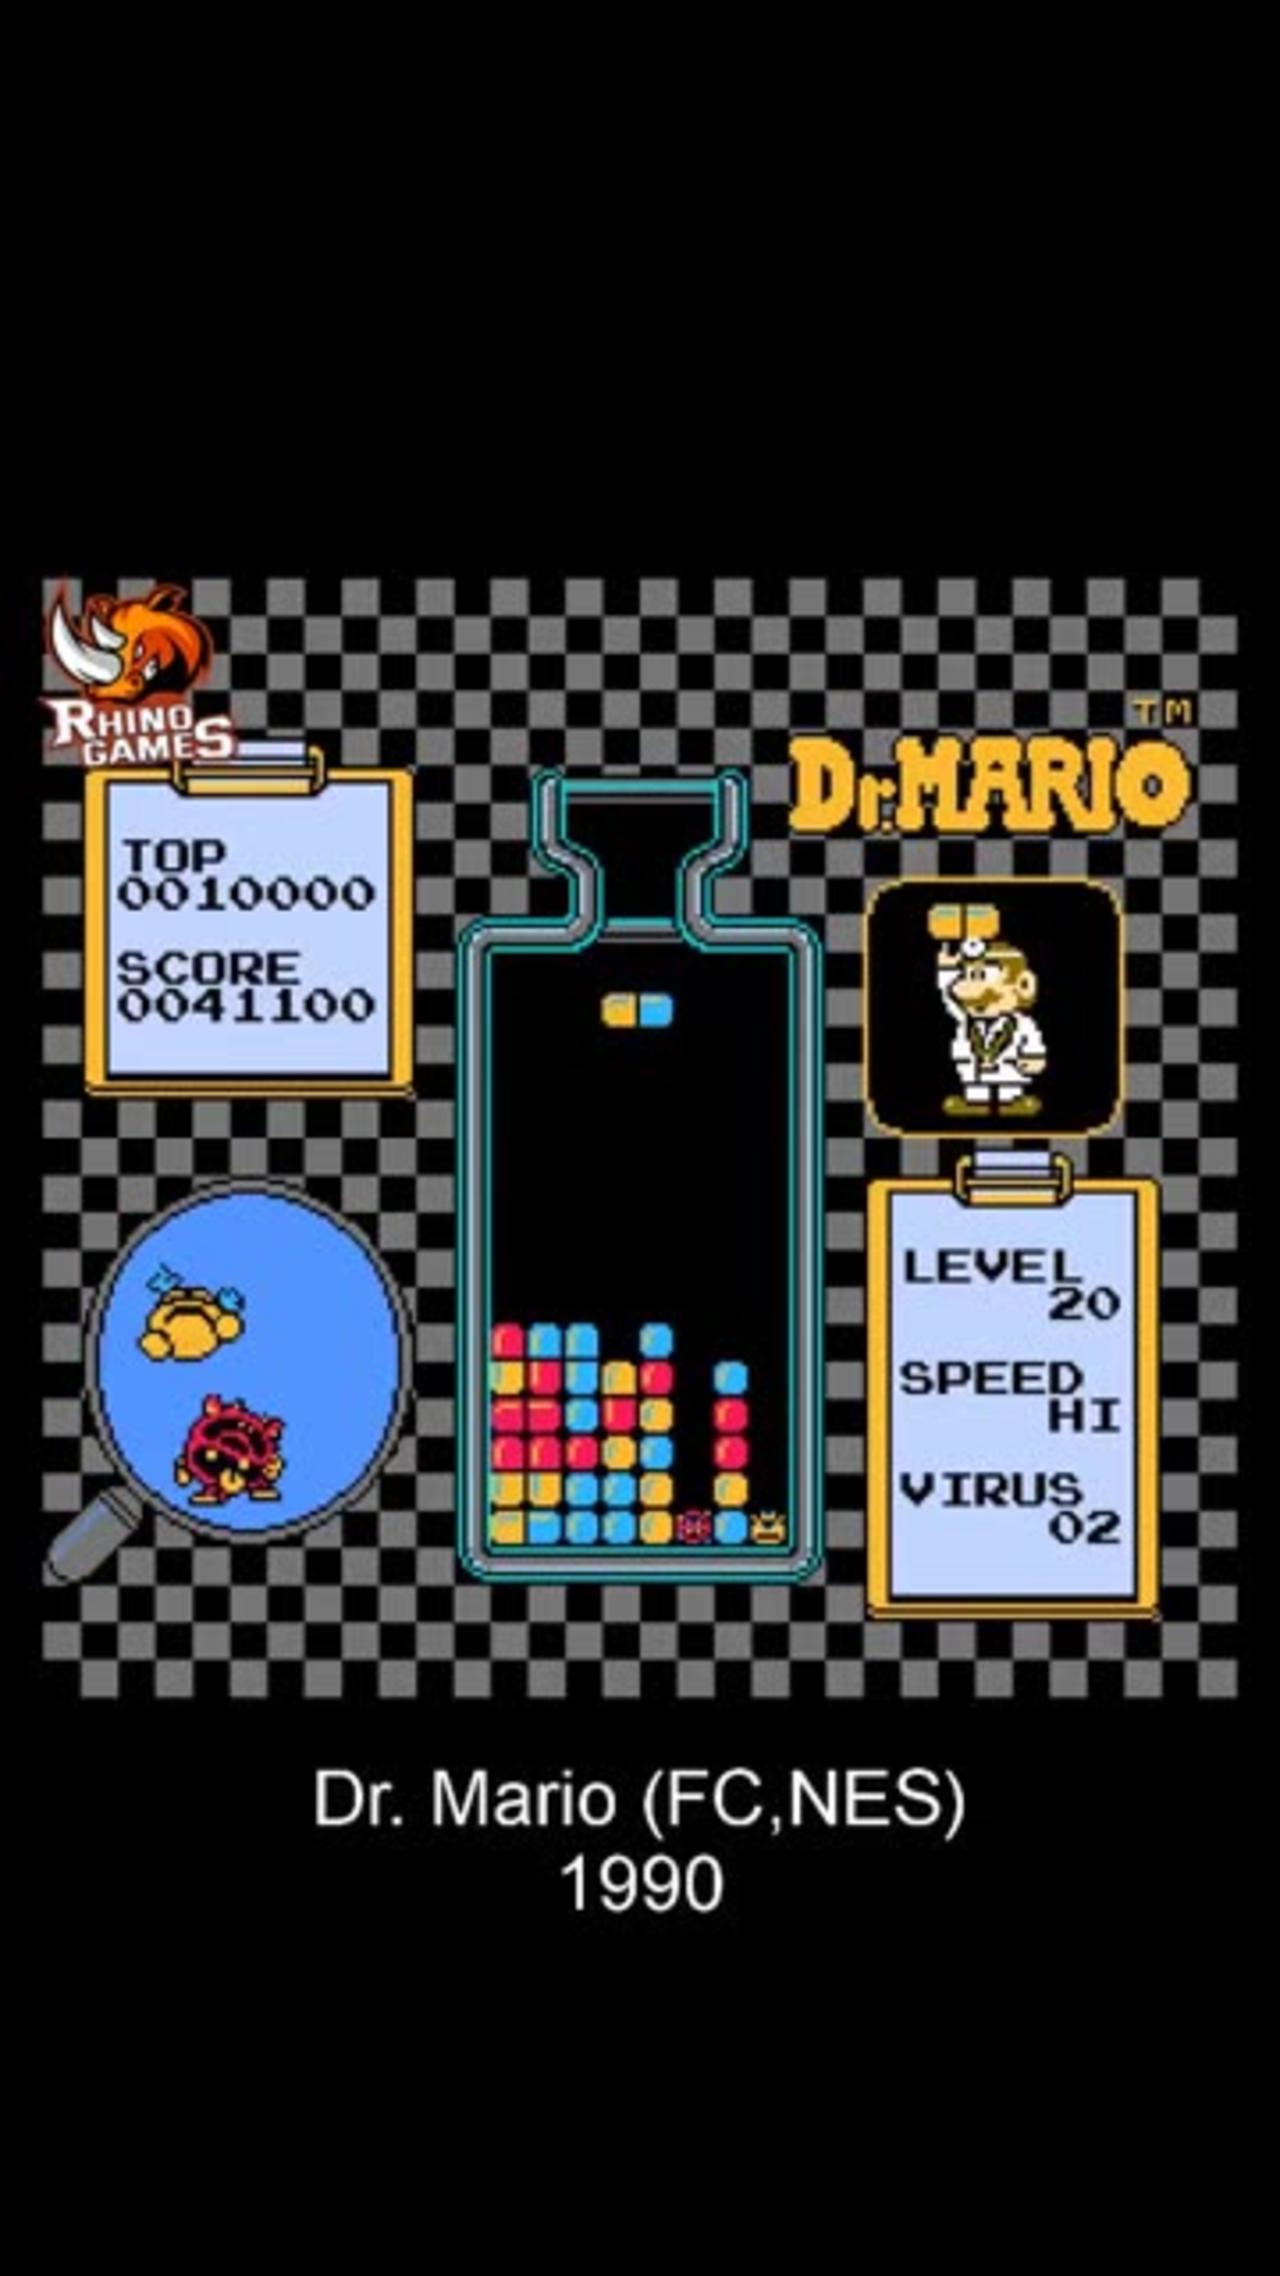 [Endgame] Dr.Mario (FC, NES) 1990 Full Game 100- Walkthrough #retrogaming #rhinogames #endgame